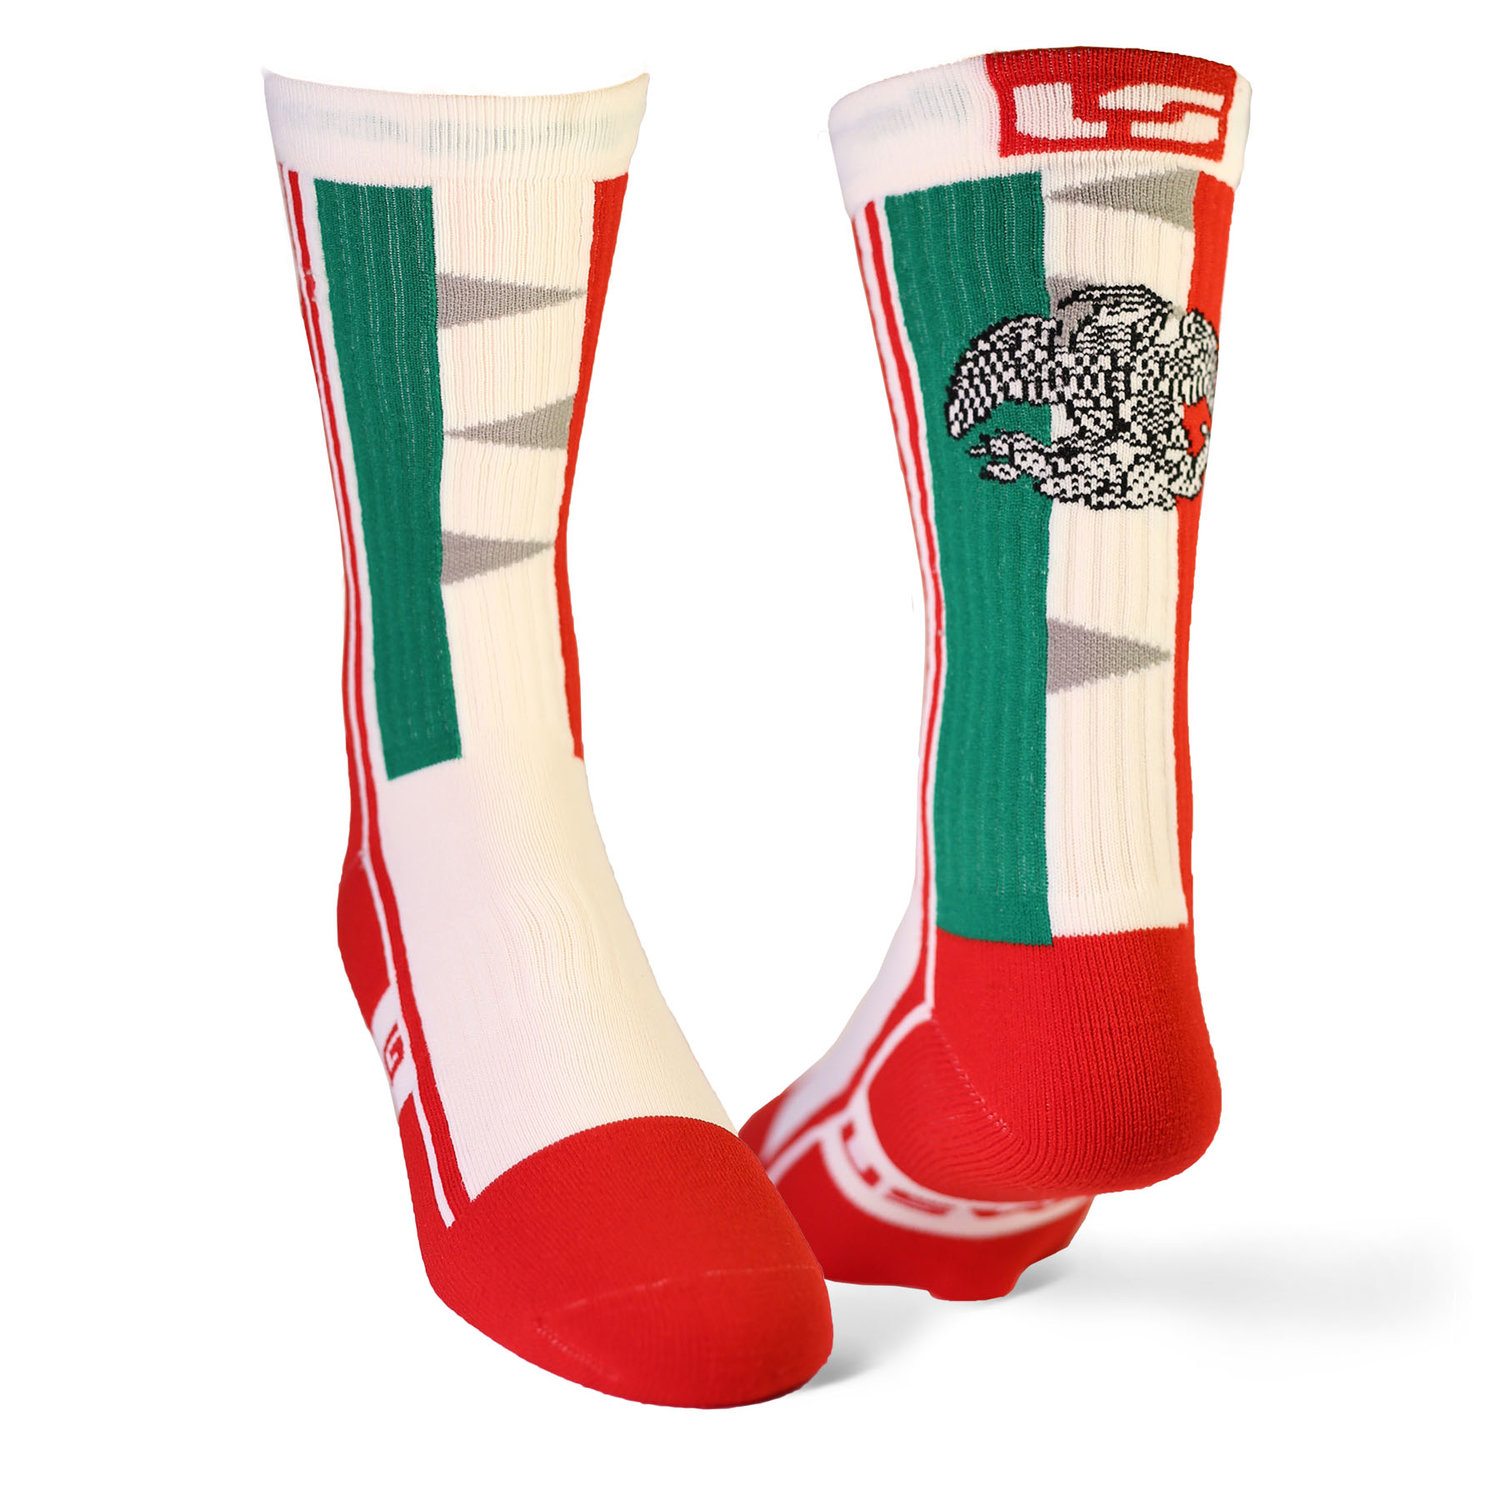 USWAG Mexico Flag Performance Socks 